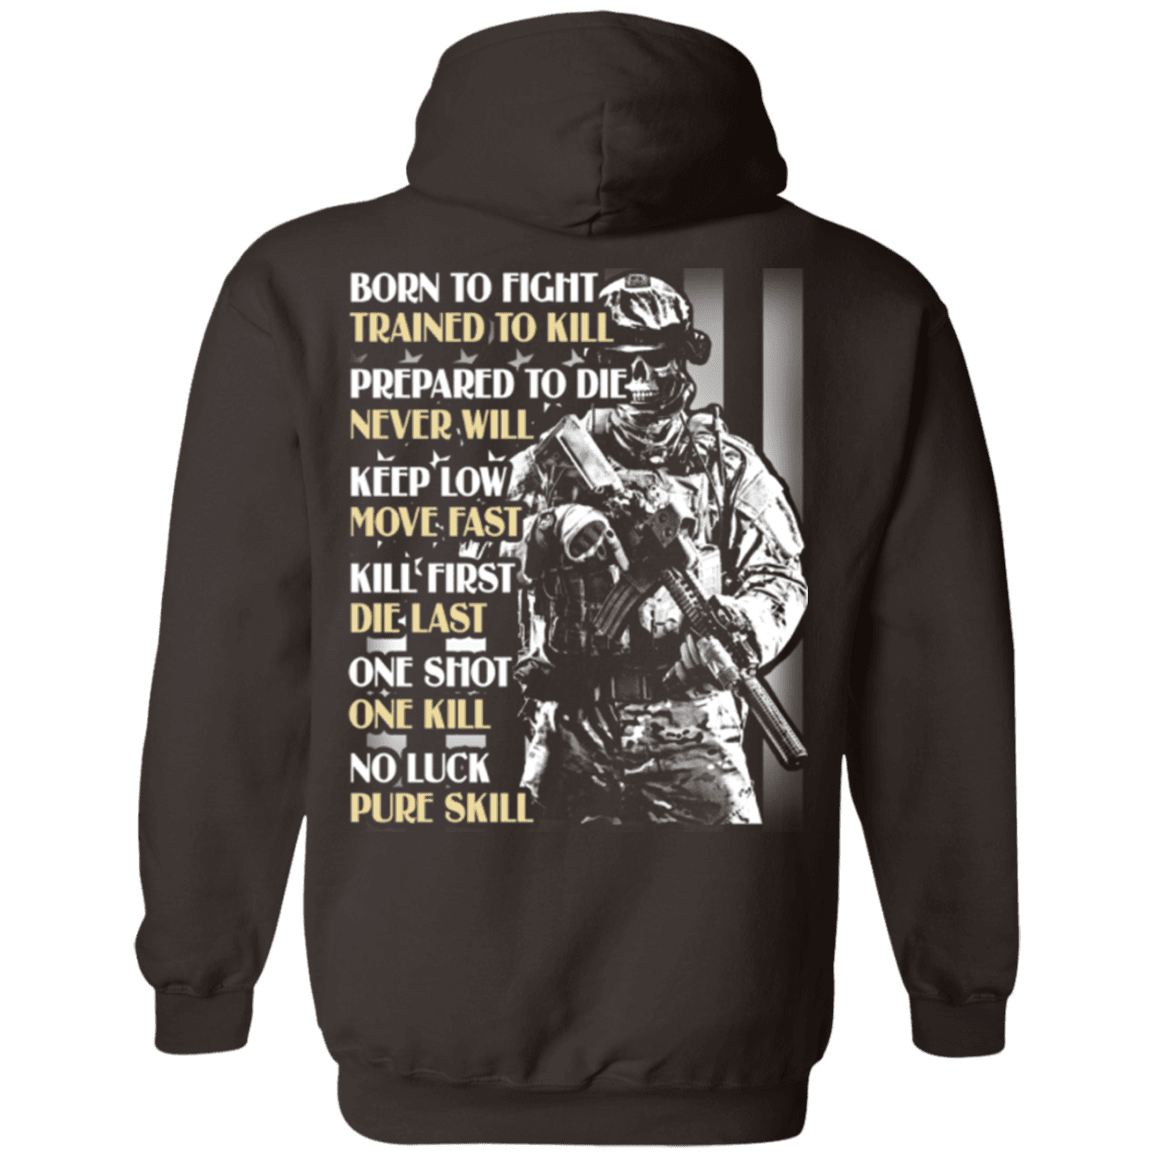 Military T-Shirt "Veteran Skill"-TShirt-General-Veterans Nation